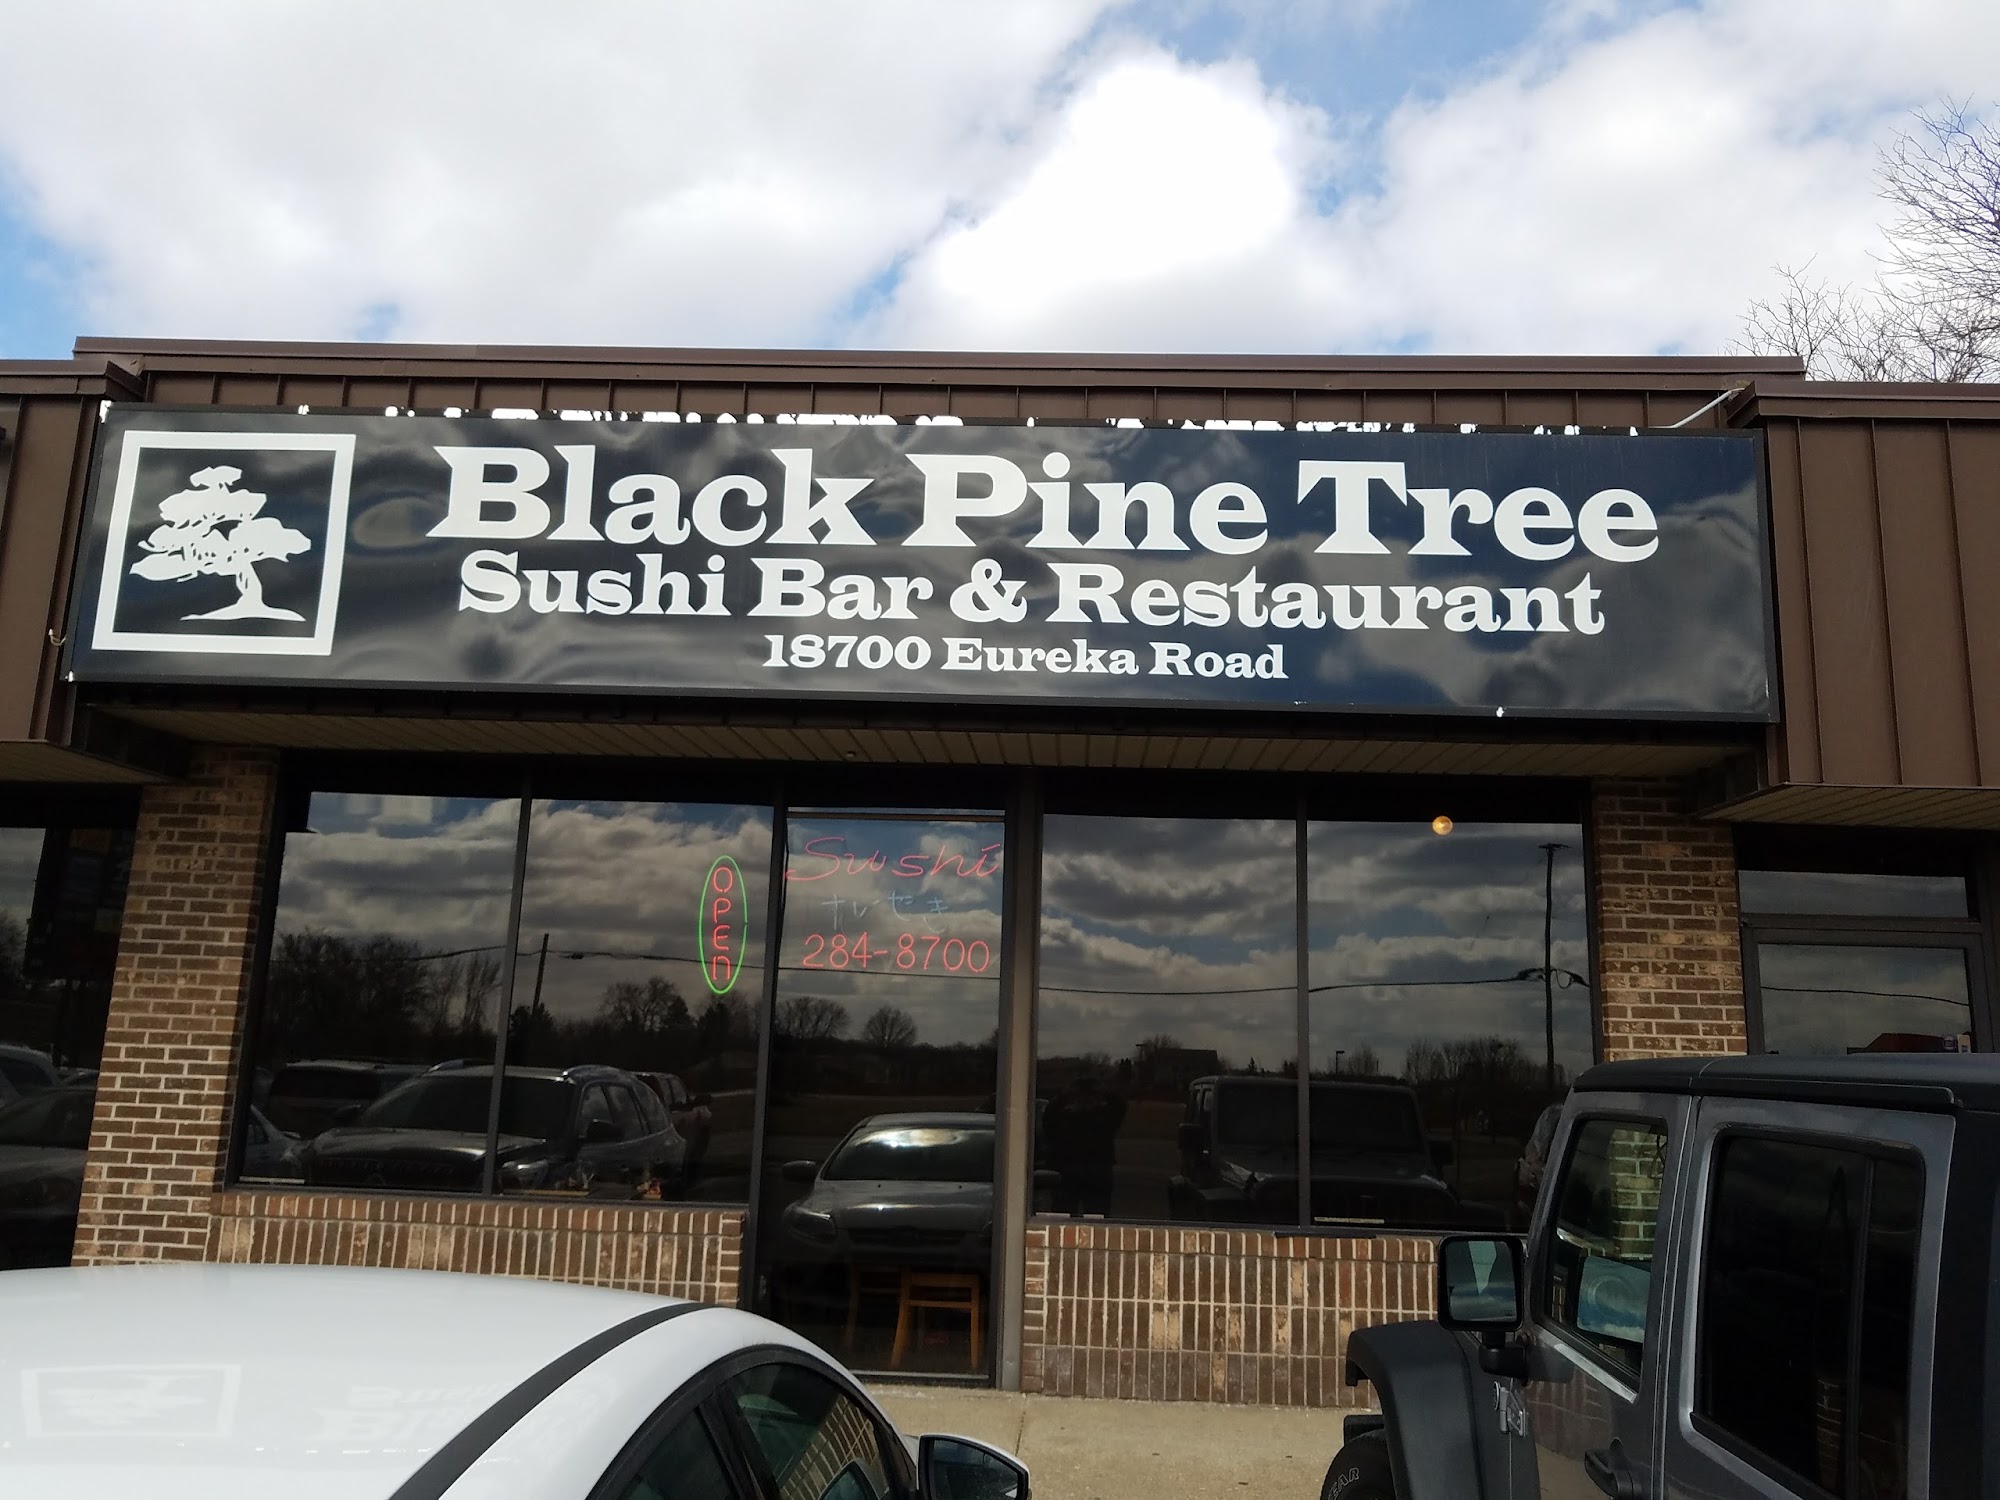 Black Pine Tree Sushi Bar